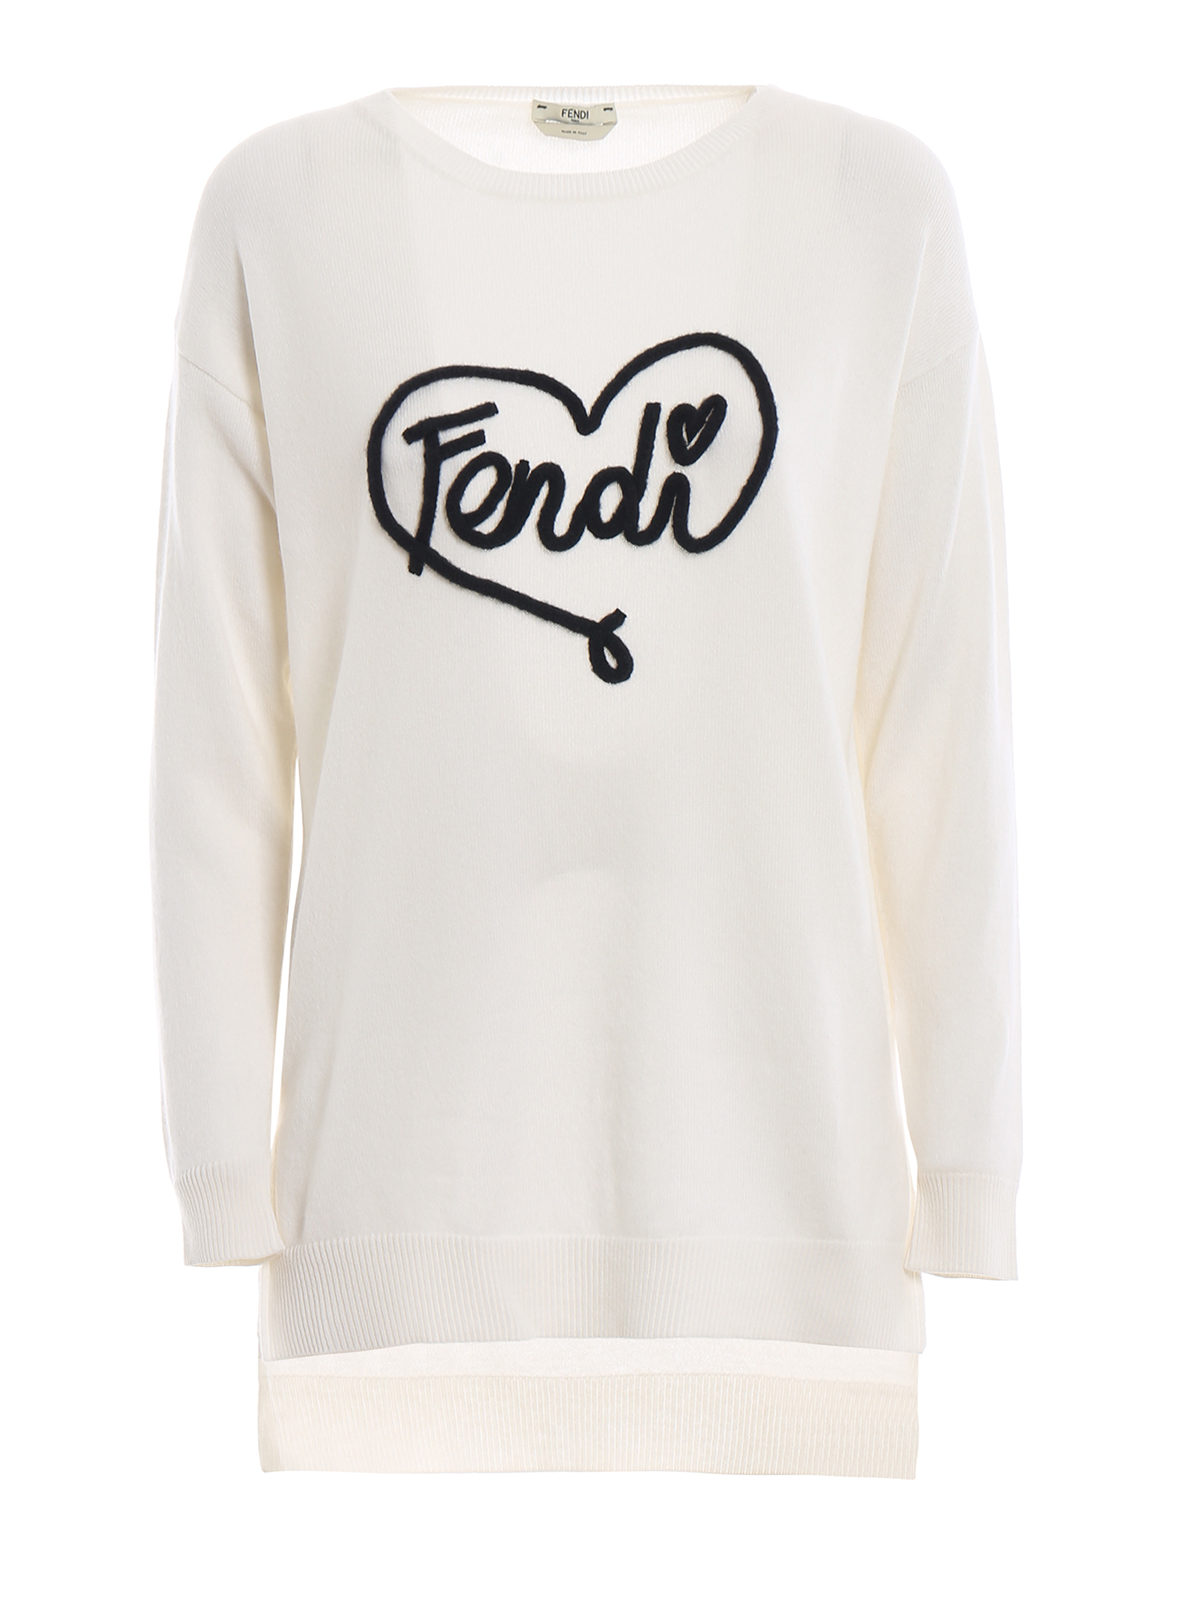 Heart Fendi embroidery cashmere sweater 